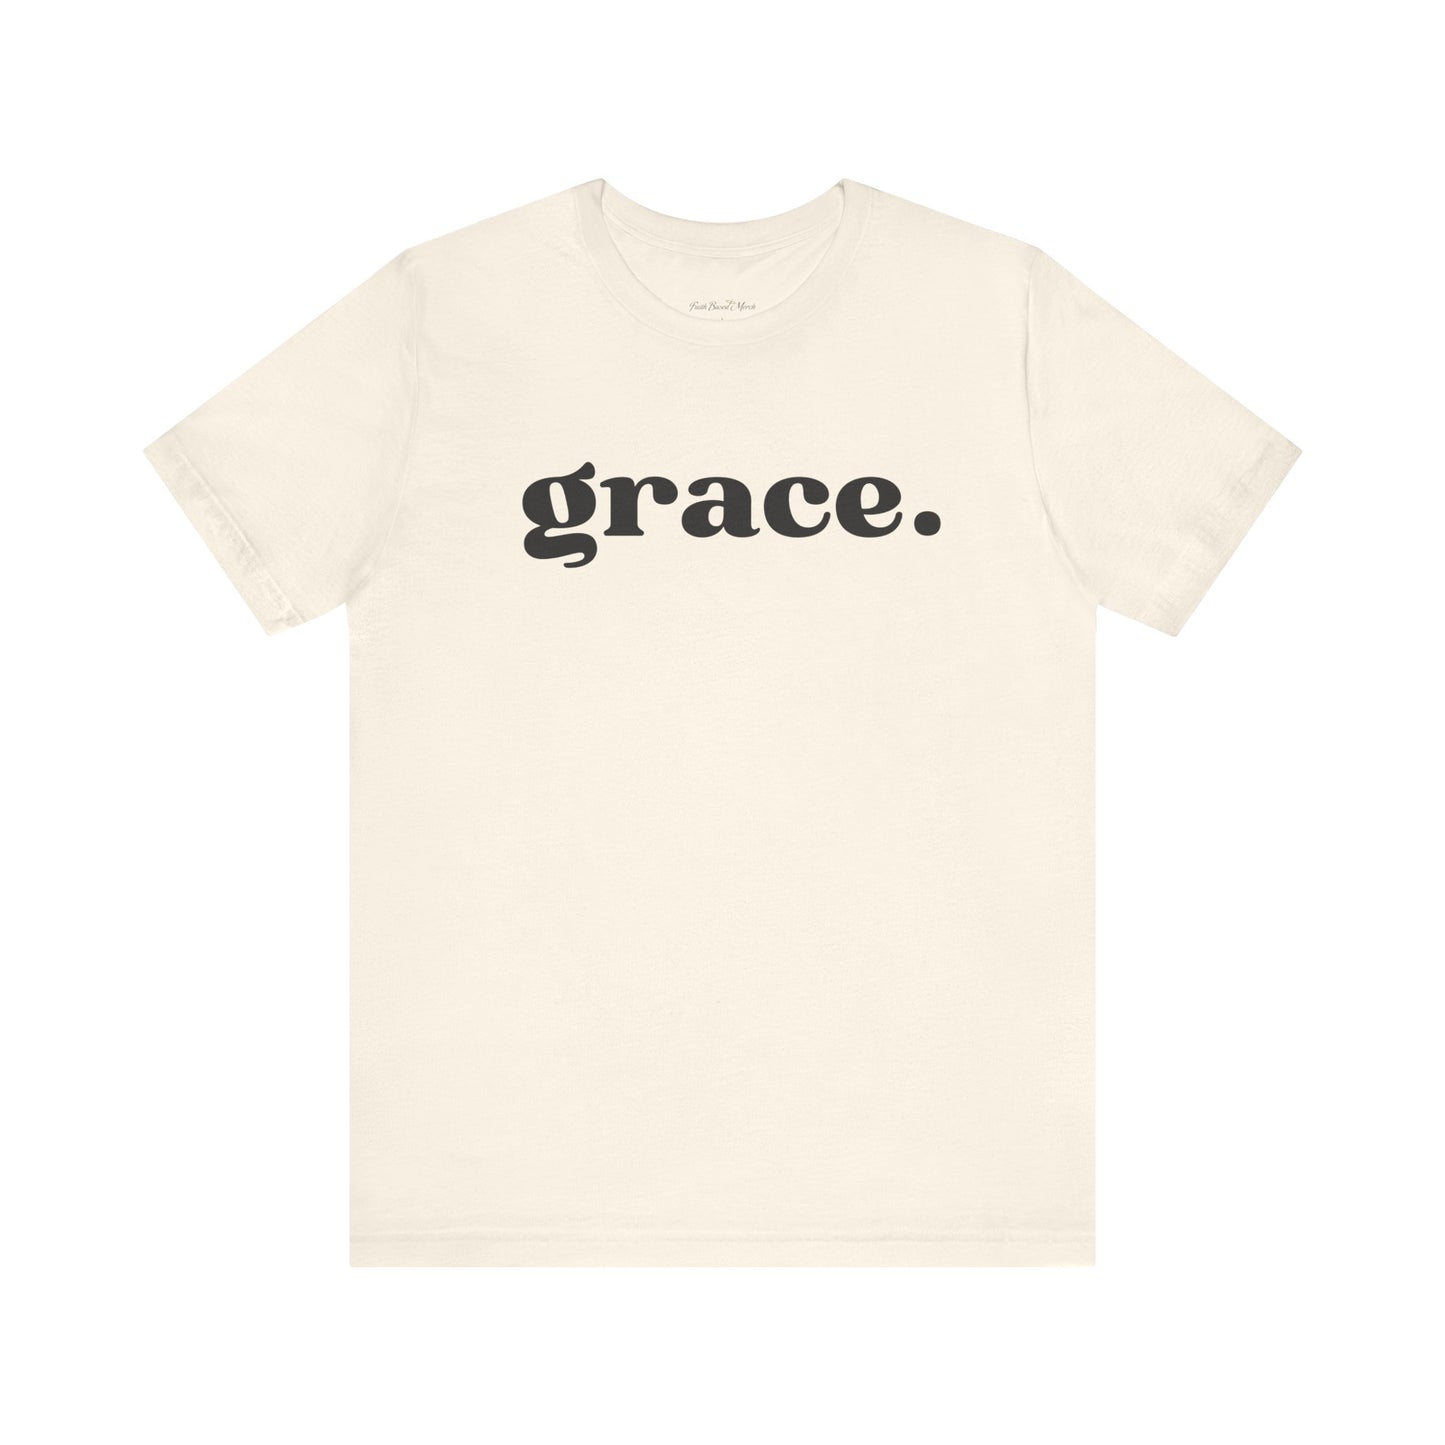 Grace T-Shirt - Natural/Black